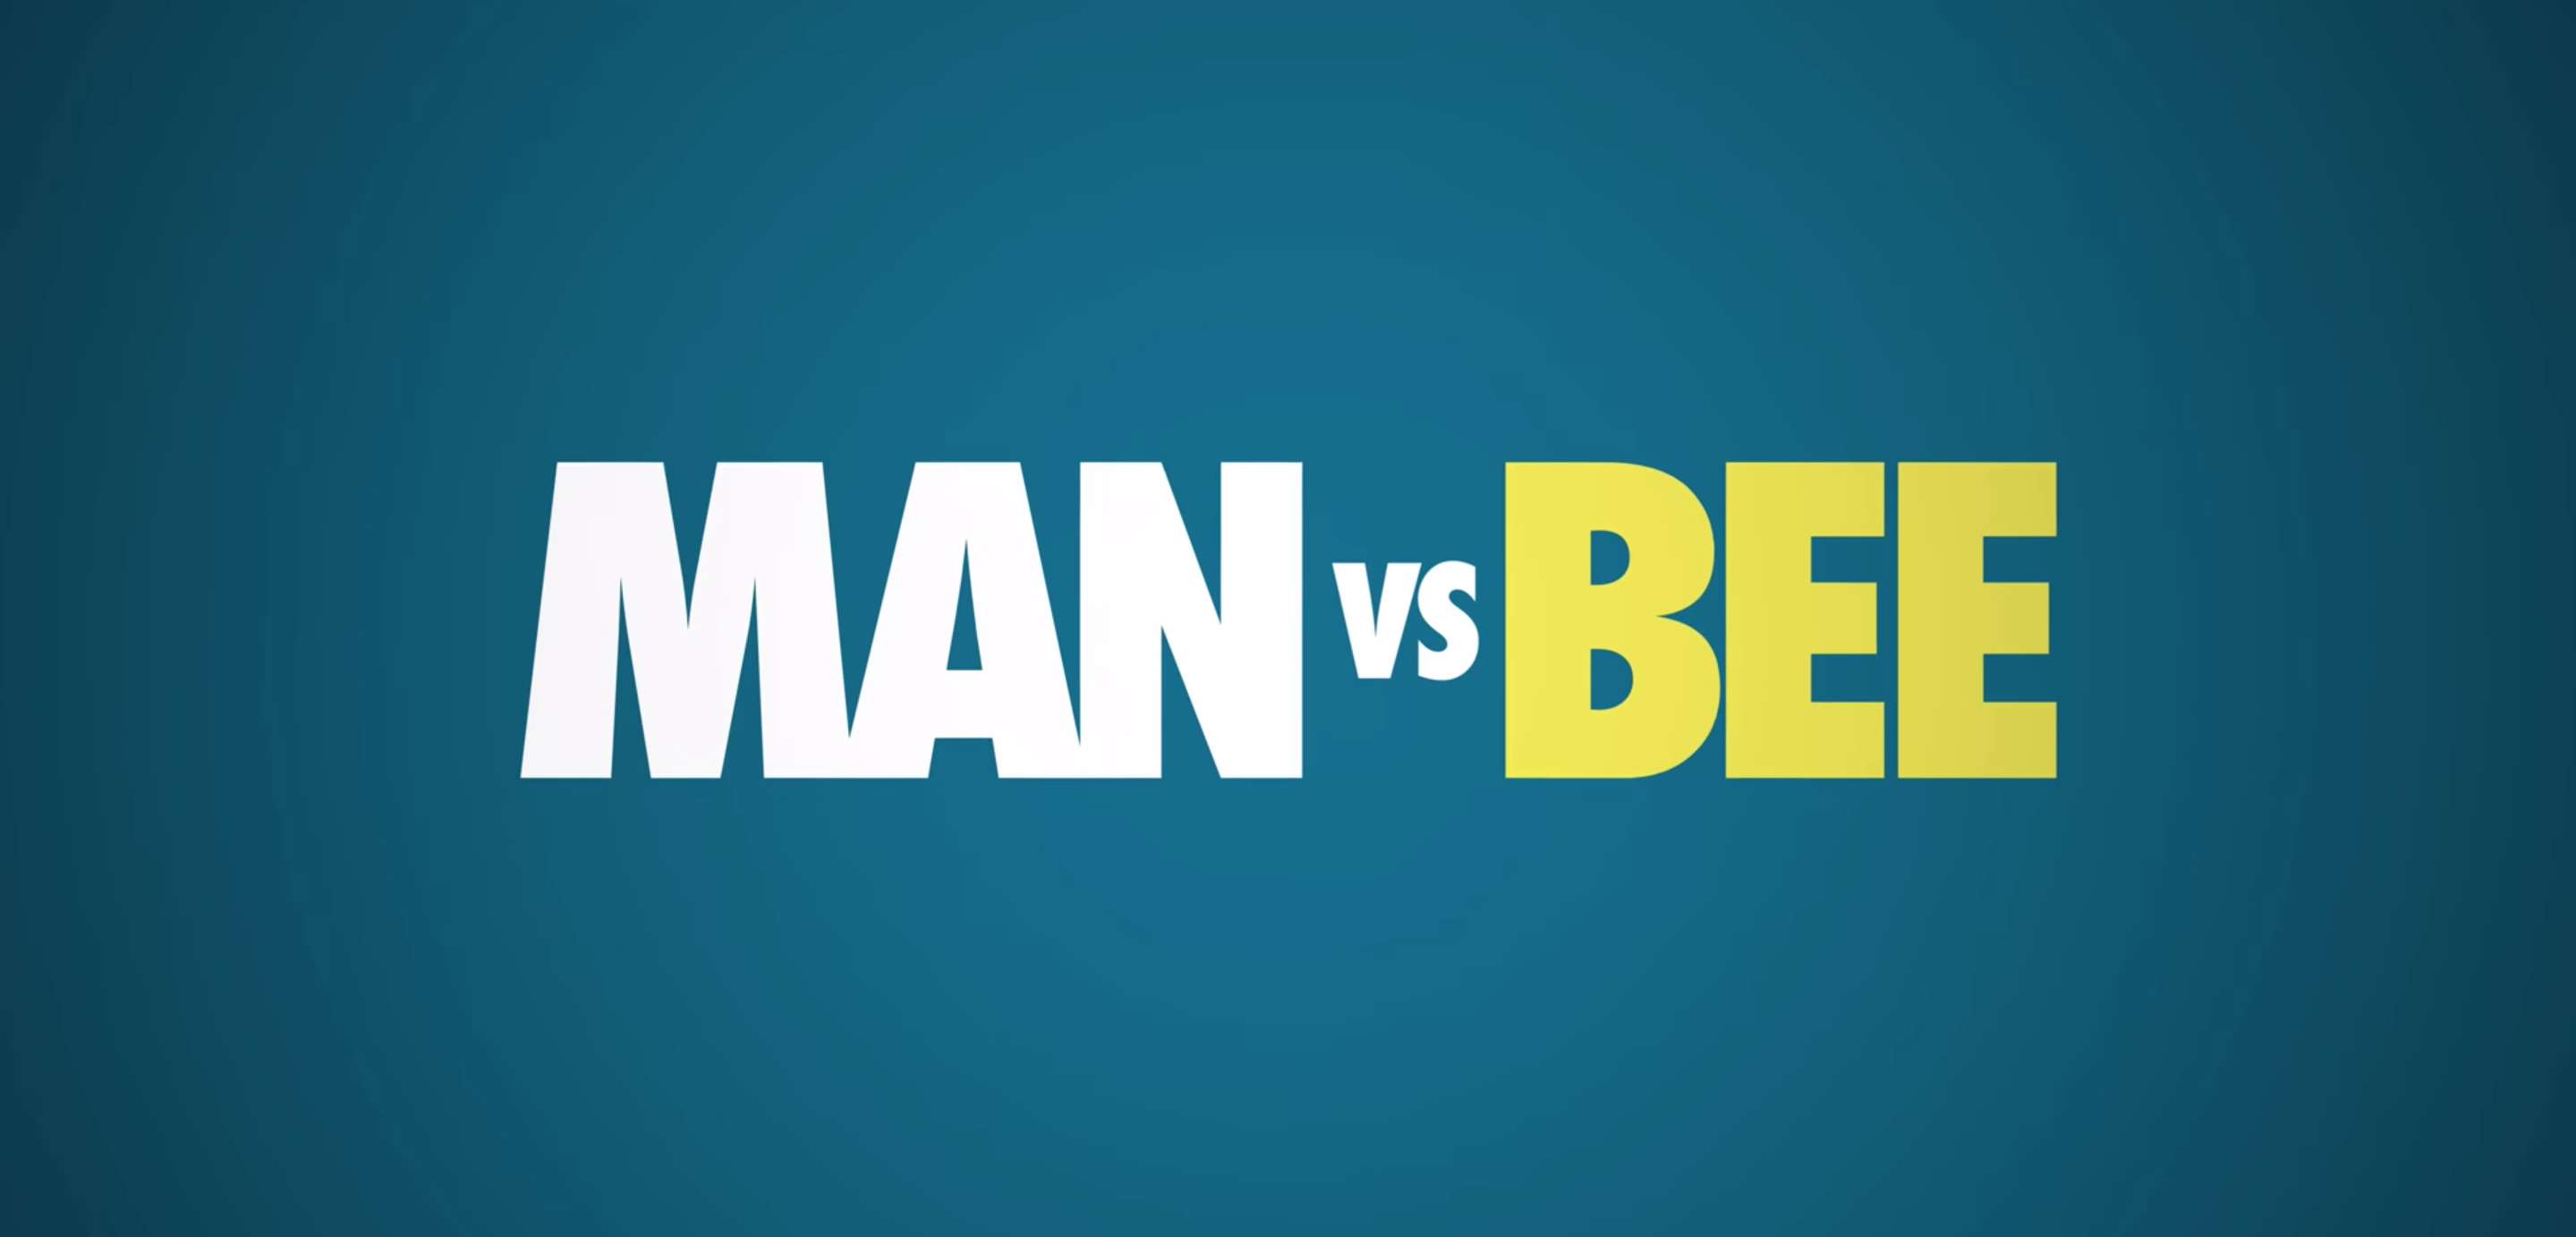 Man vs. Bee, Rowan Atkinson, Bee battles, Netflix comedy, 2880x1390 Dual Screen Desktop